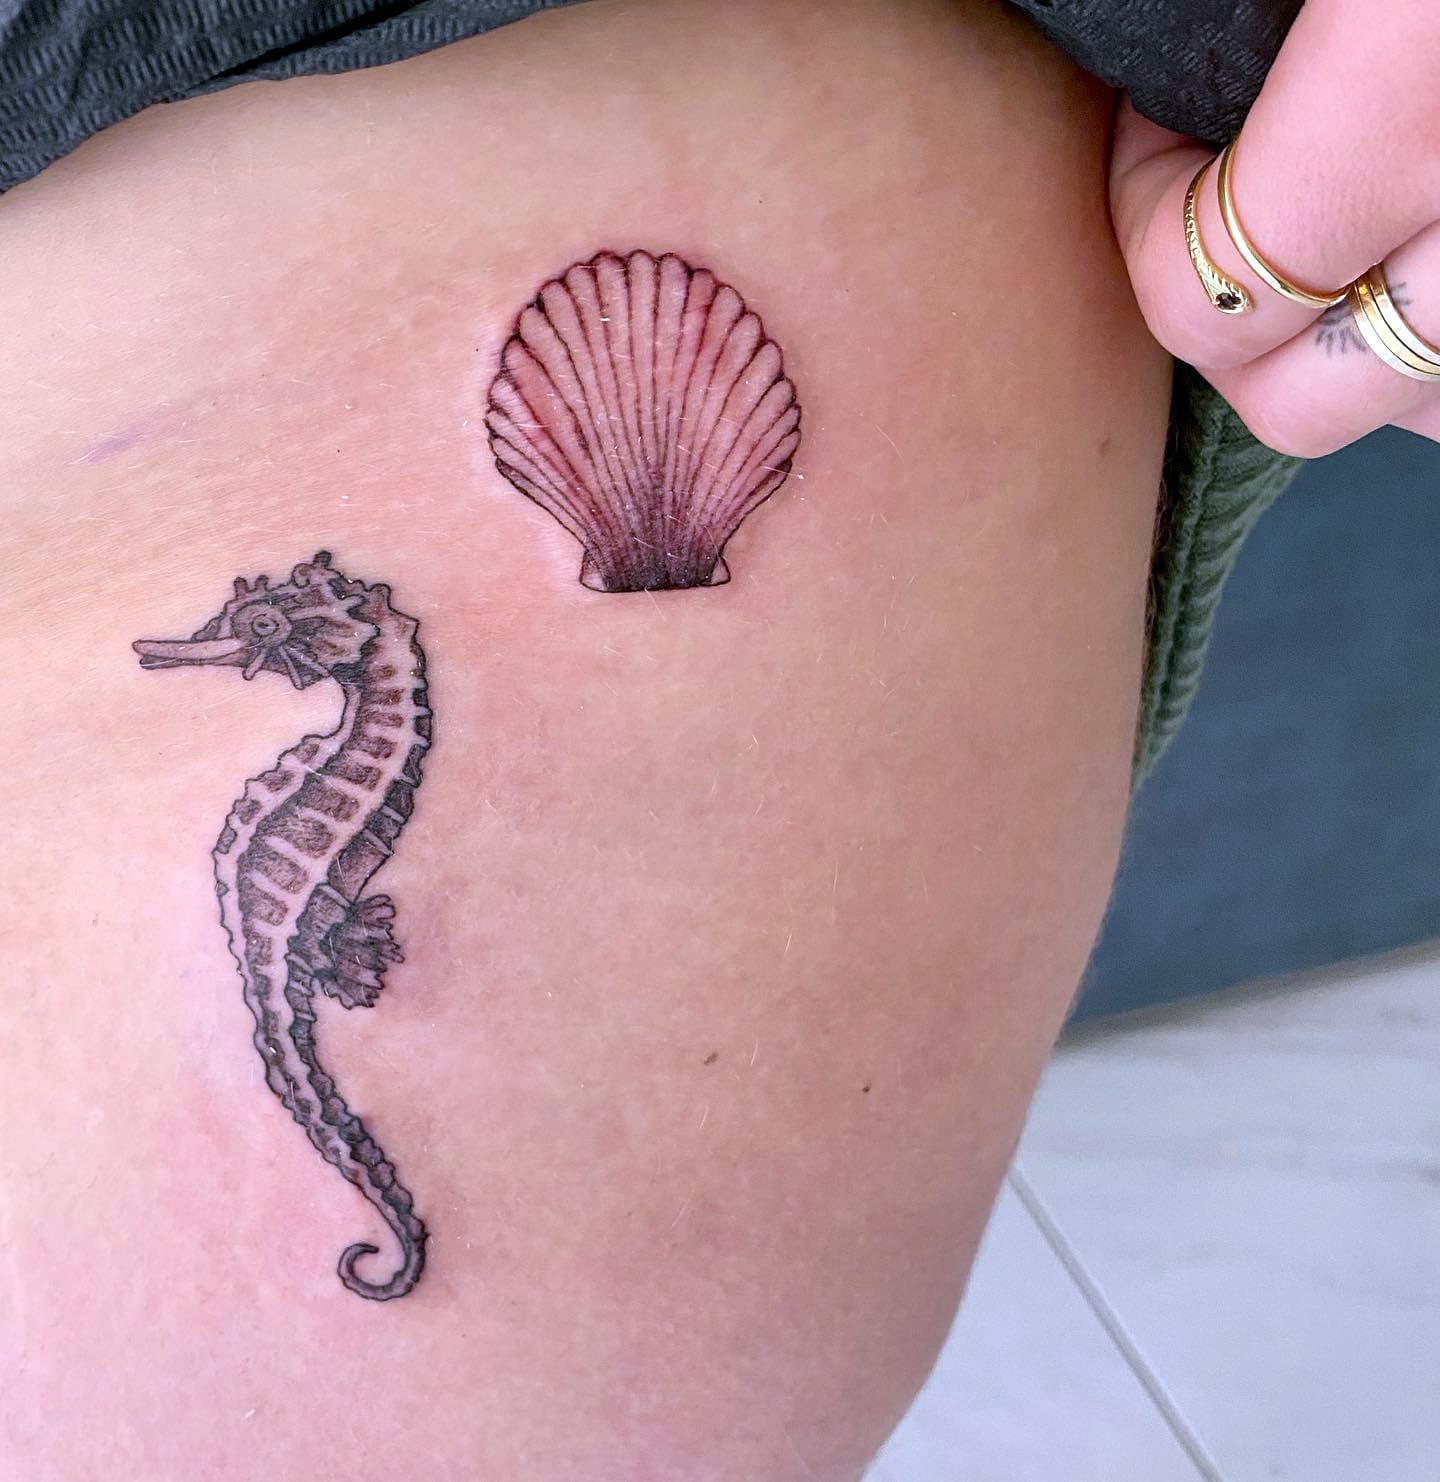 Diseño de tatuaje de caballito de mar en el pecho